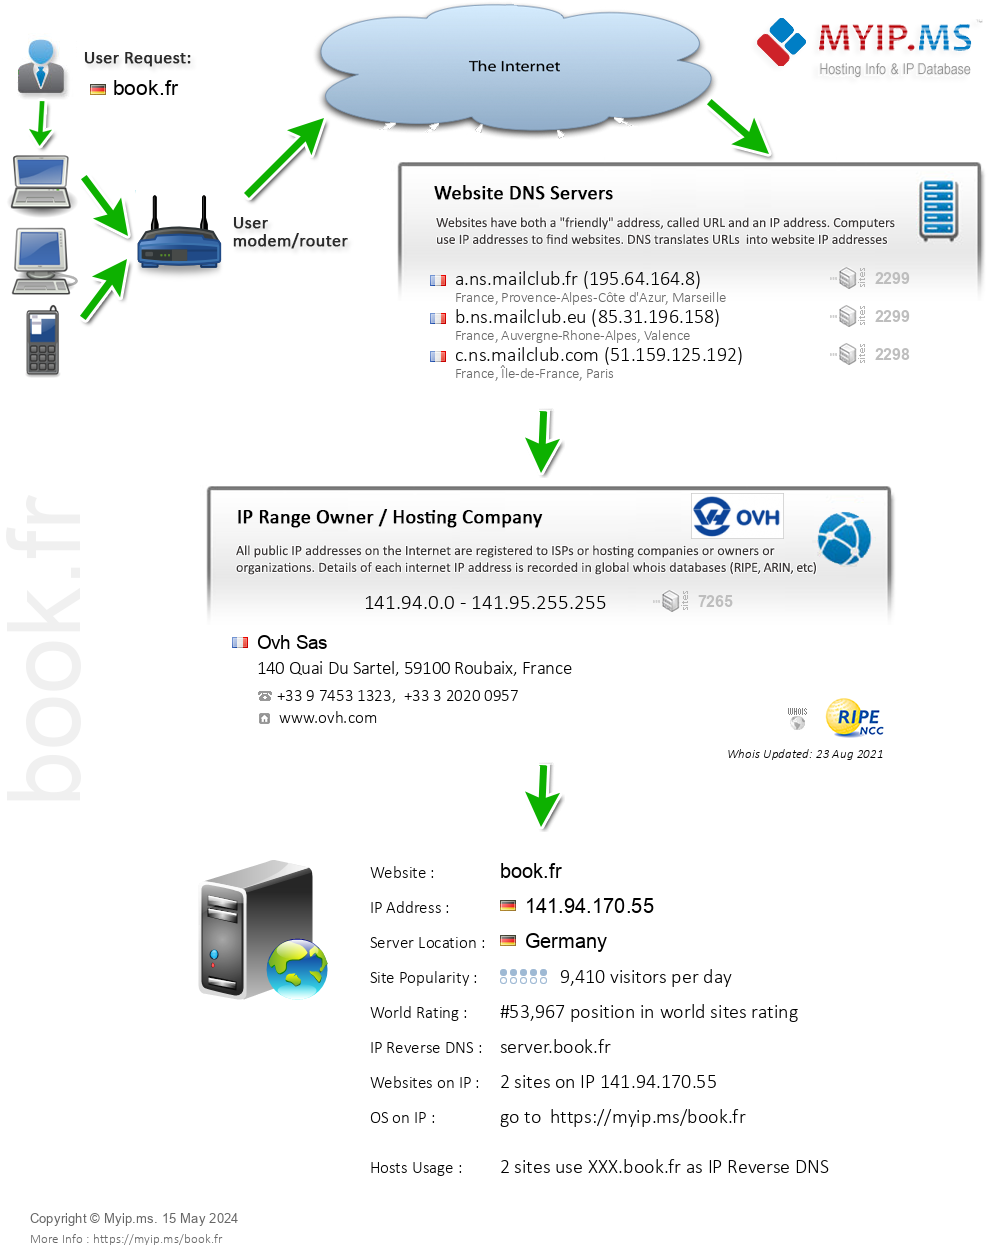 Book.fr - Website Hosting Visual IP Diagram